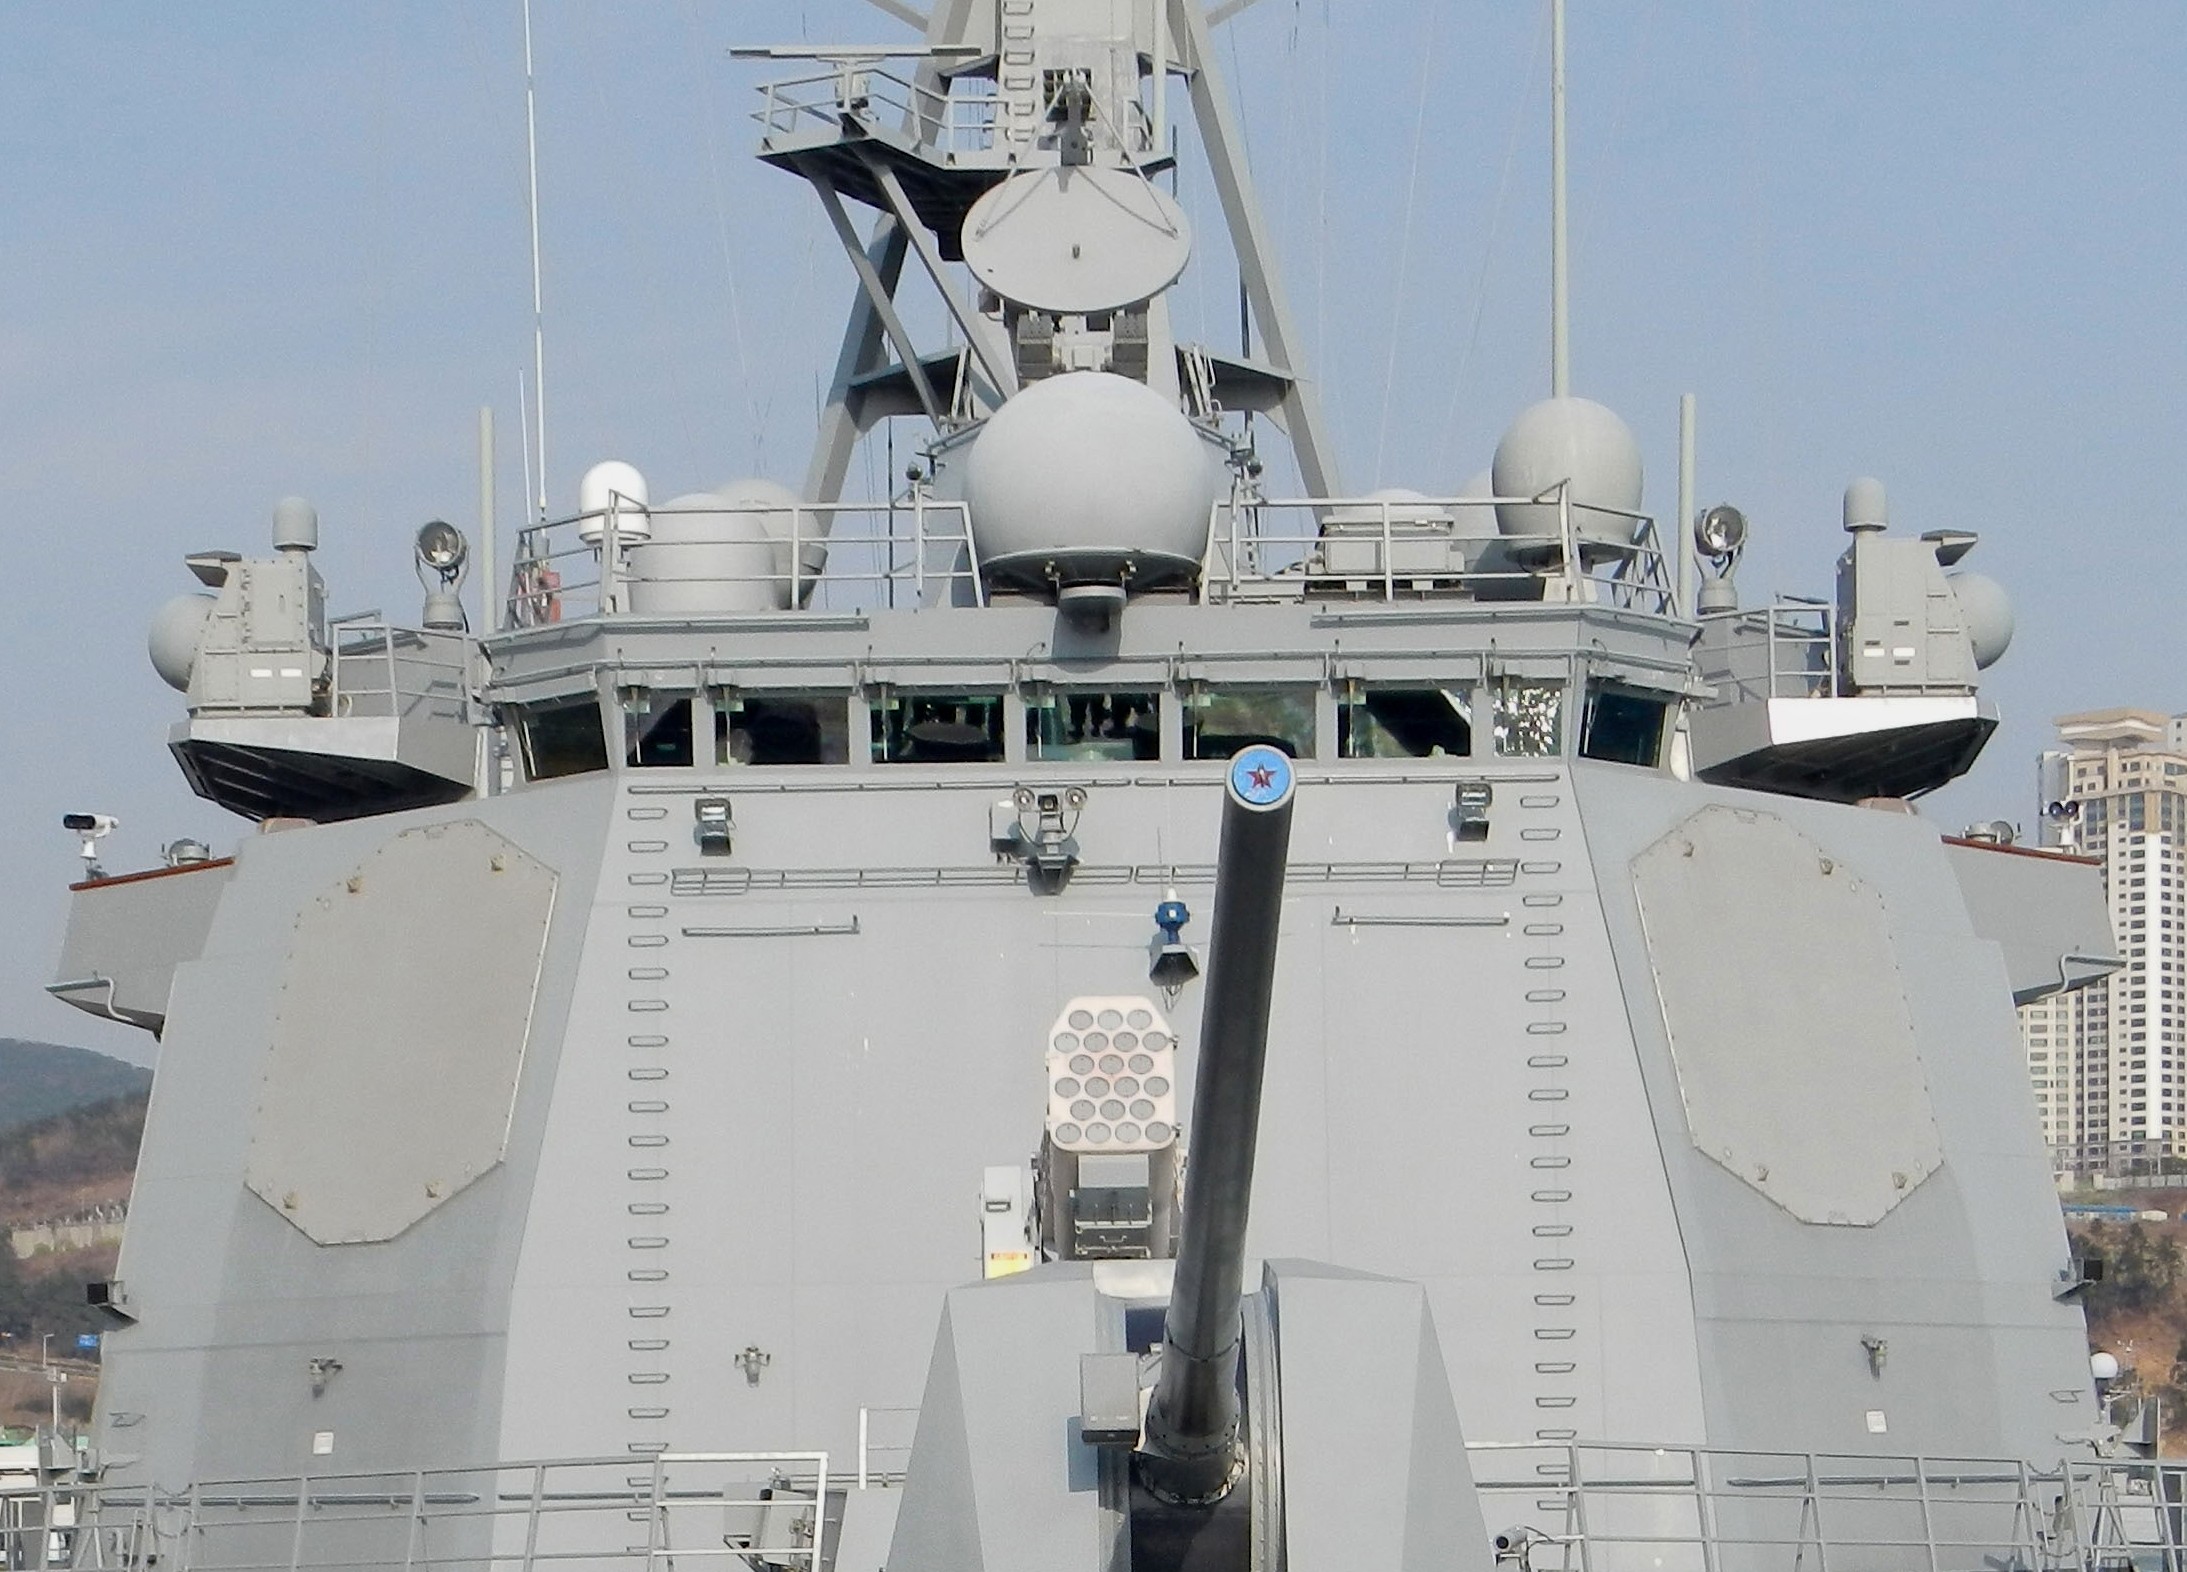 ddg-991 roks sejong the great guided missile destroyer aegis republic of korea navy rok 10 an/spy-1d radar